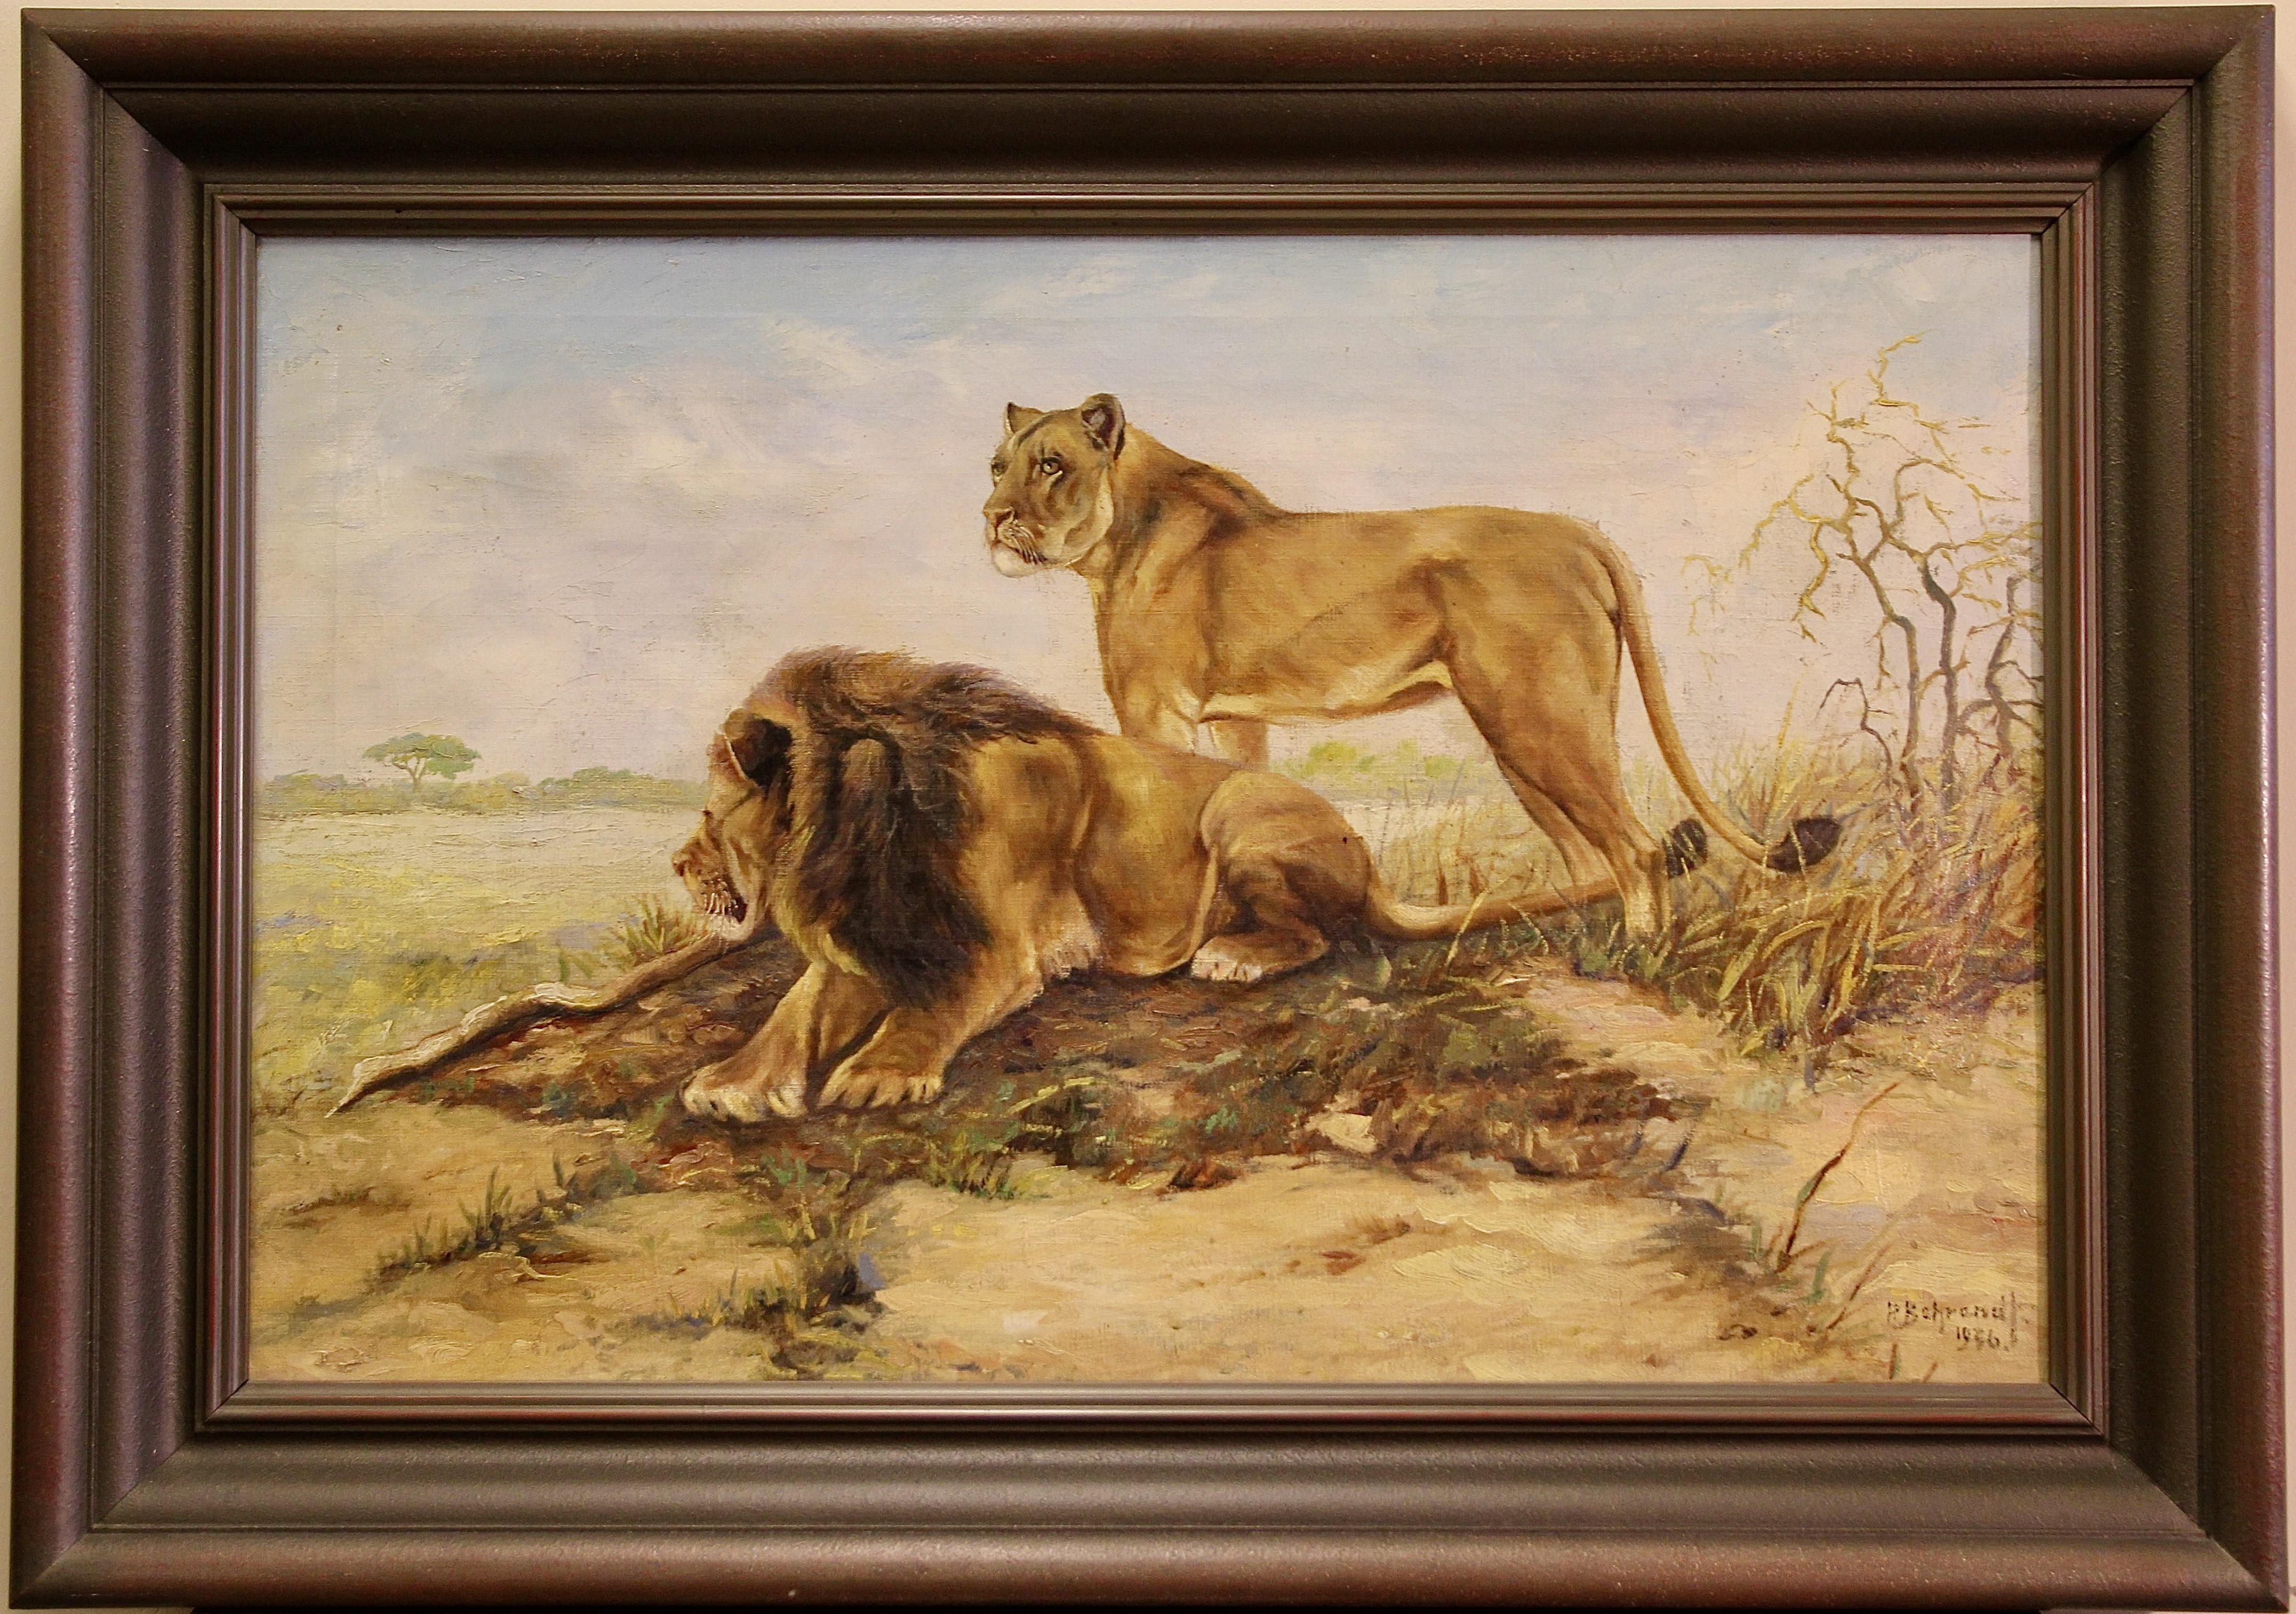 P. Behrendt Landscape Painting - Decorative Oil Painting, Pair of Lions, Safari Wilderness Landscape, Africa.